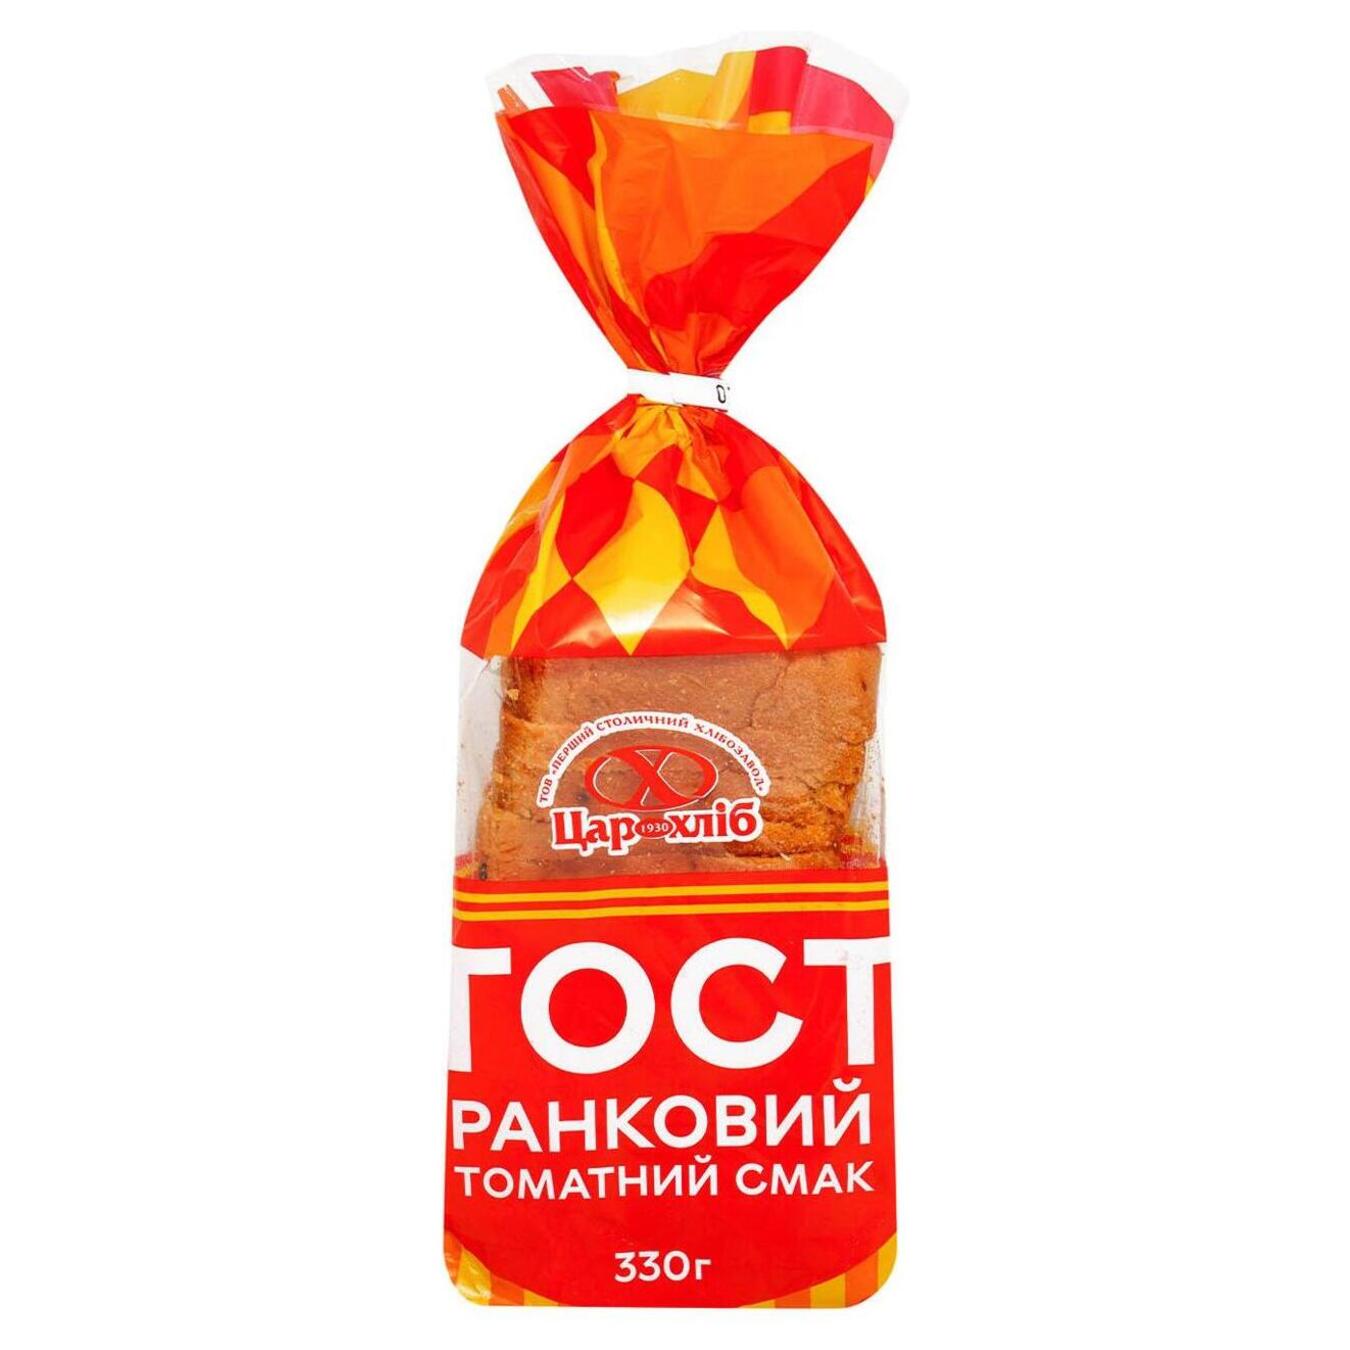 Bread Toast morning tomato Tsarkhlib cut into slices 330g